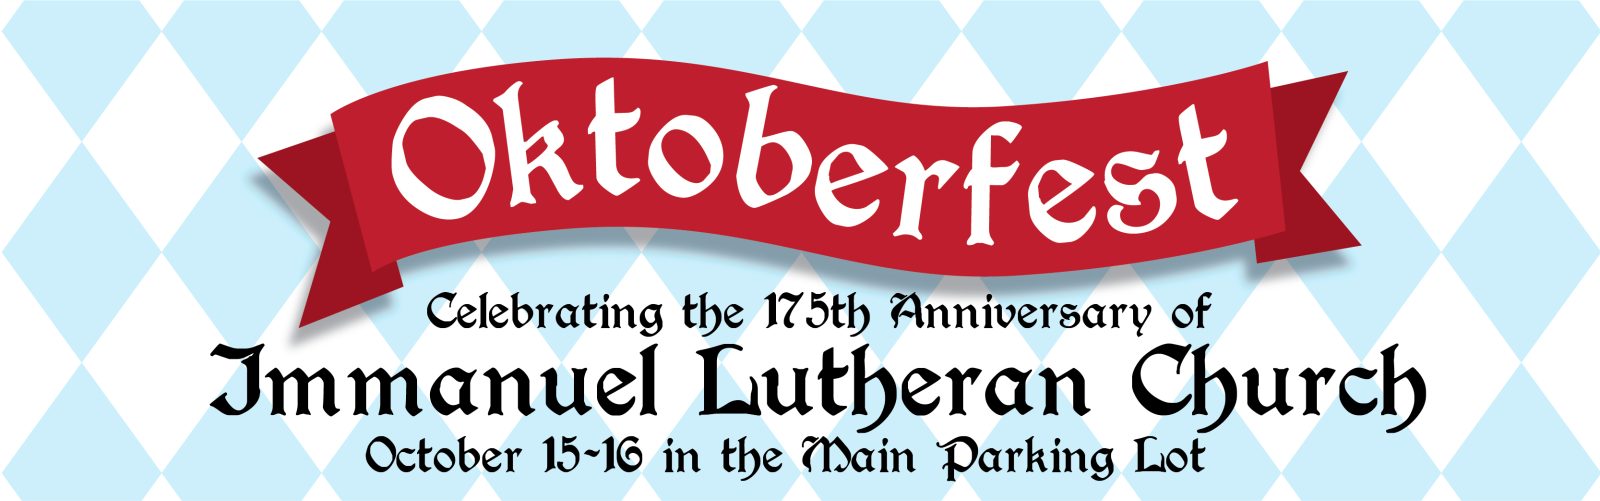 Oktoberfest_homepage_banner-01